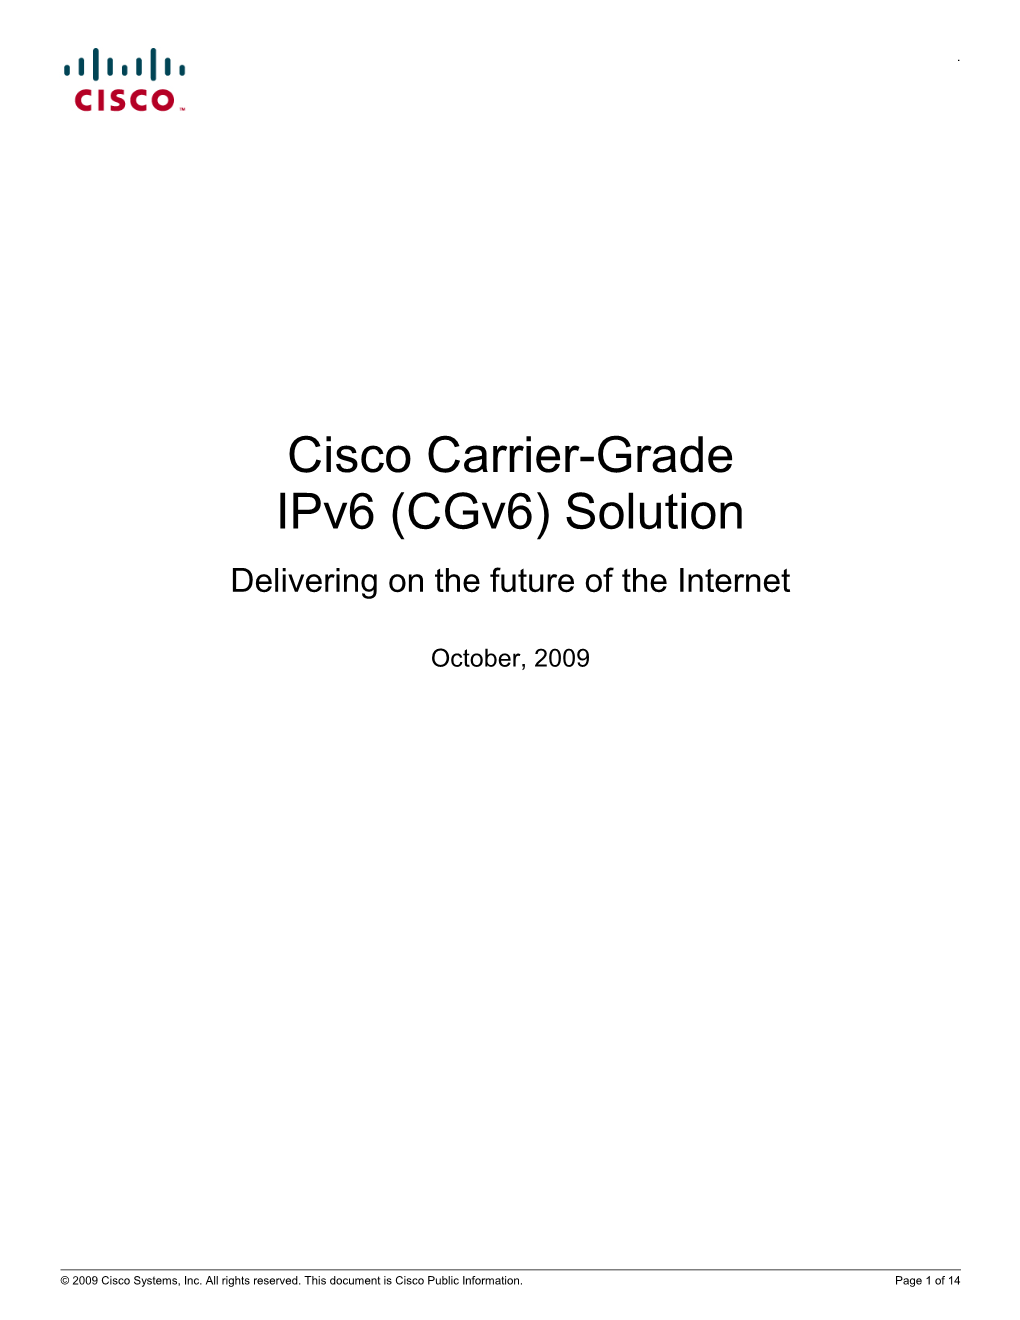 Cisco Carrier-Grade Ipv6 (Cgv6) Solution